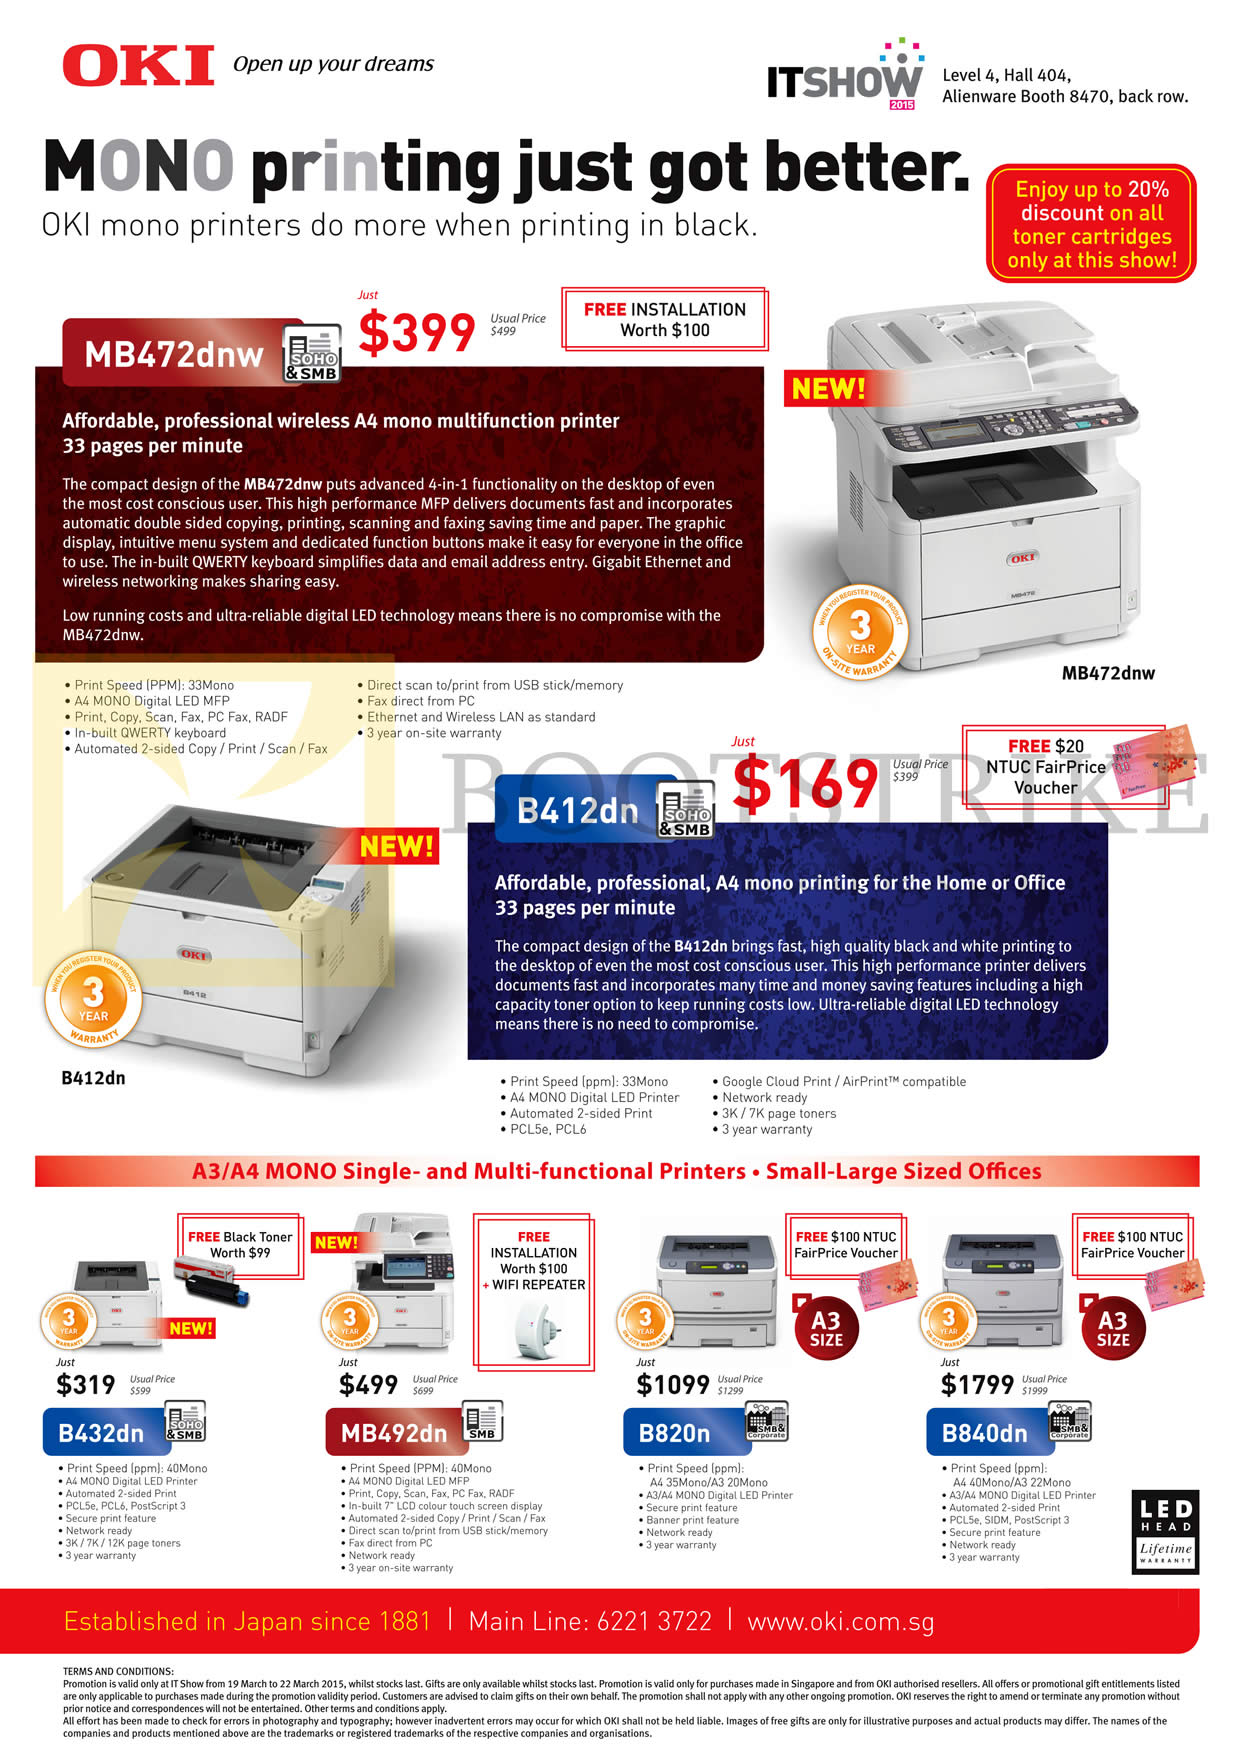 IT SHOW 2015 price list image brochure of GamePro OKI Printers Digital LED MB472dnw, B412dn, B432dn, MB492dn, B820n, B840dn